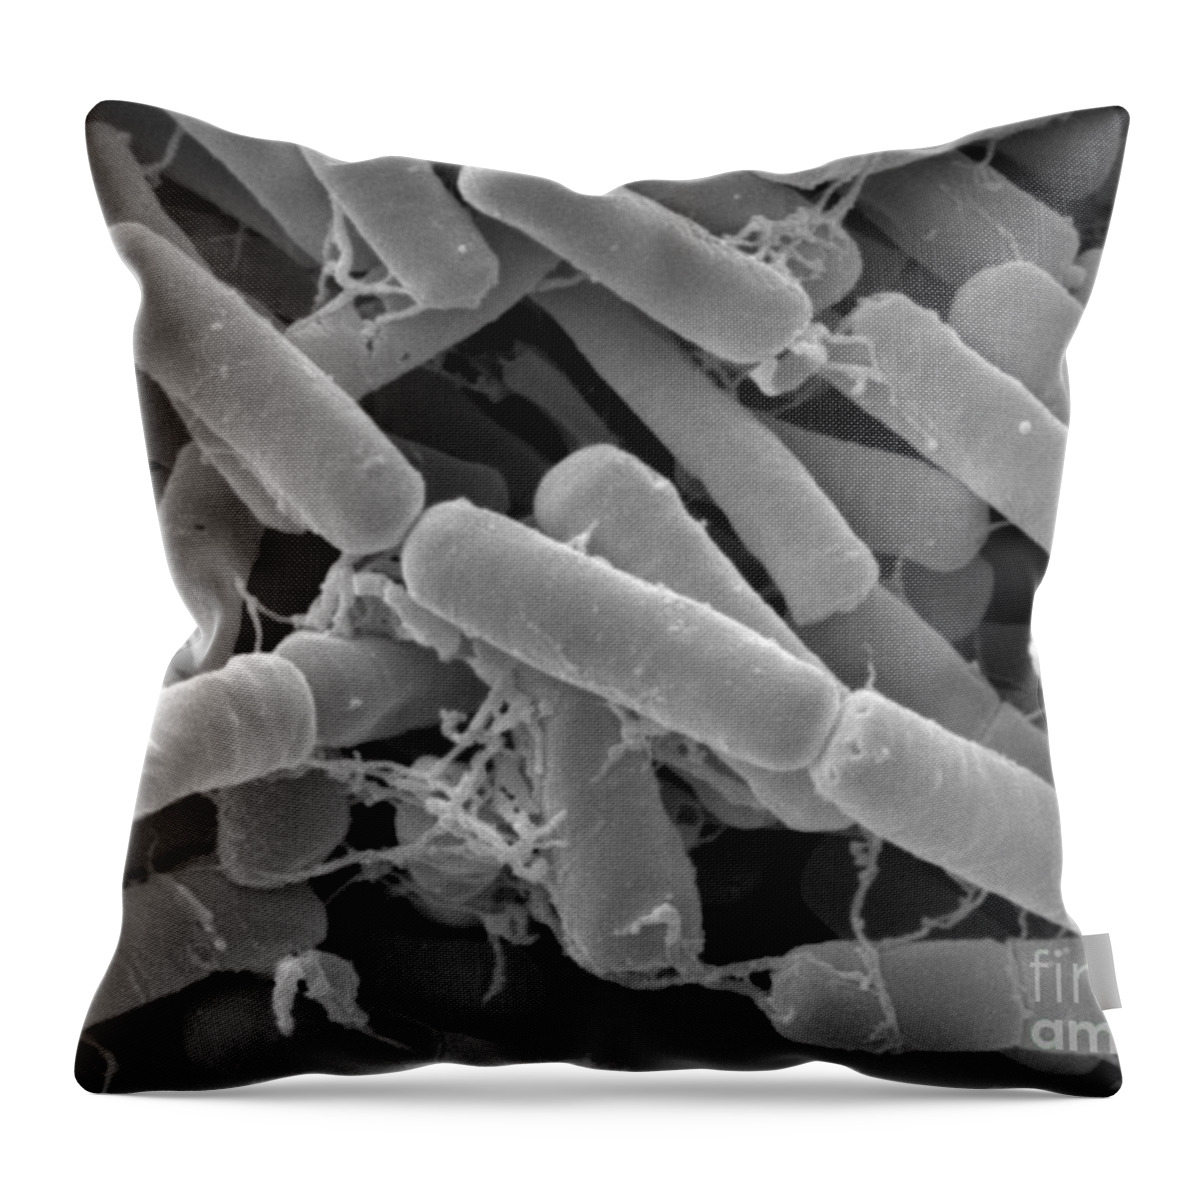 Bacillus Thuringiensis Throw Pillow featuring the photograph Bacillus Thuringiensis Bacteria by Scimat